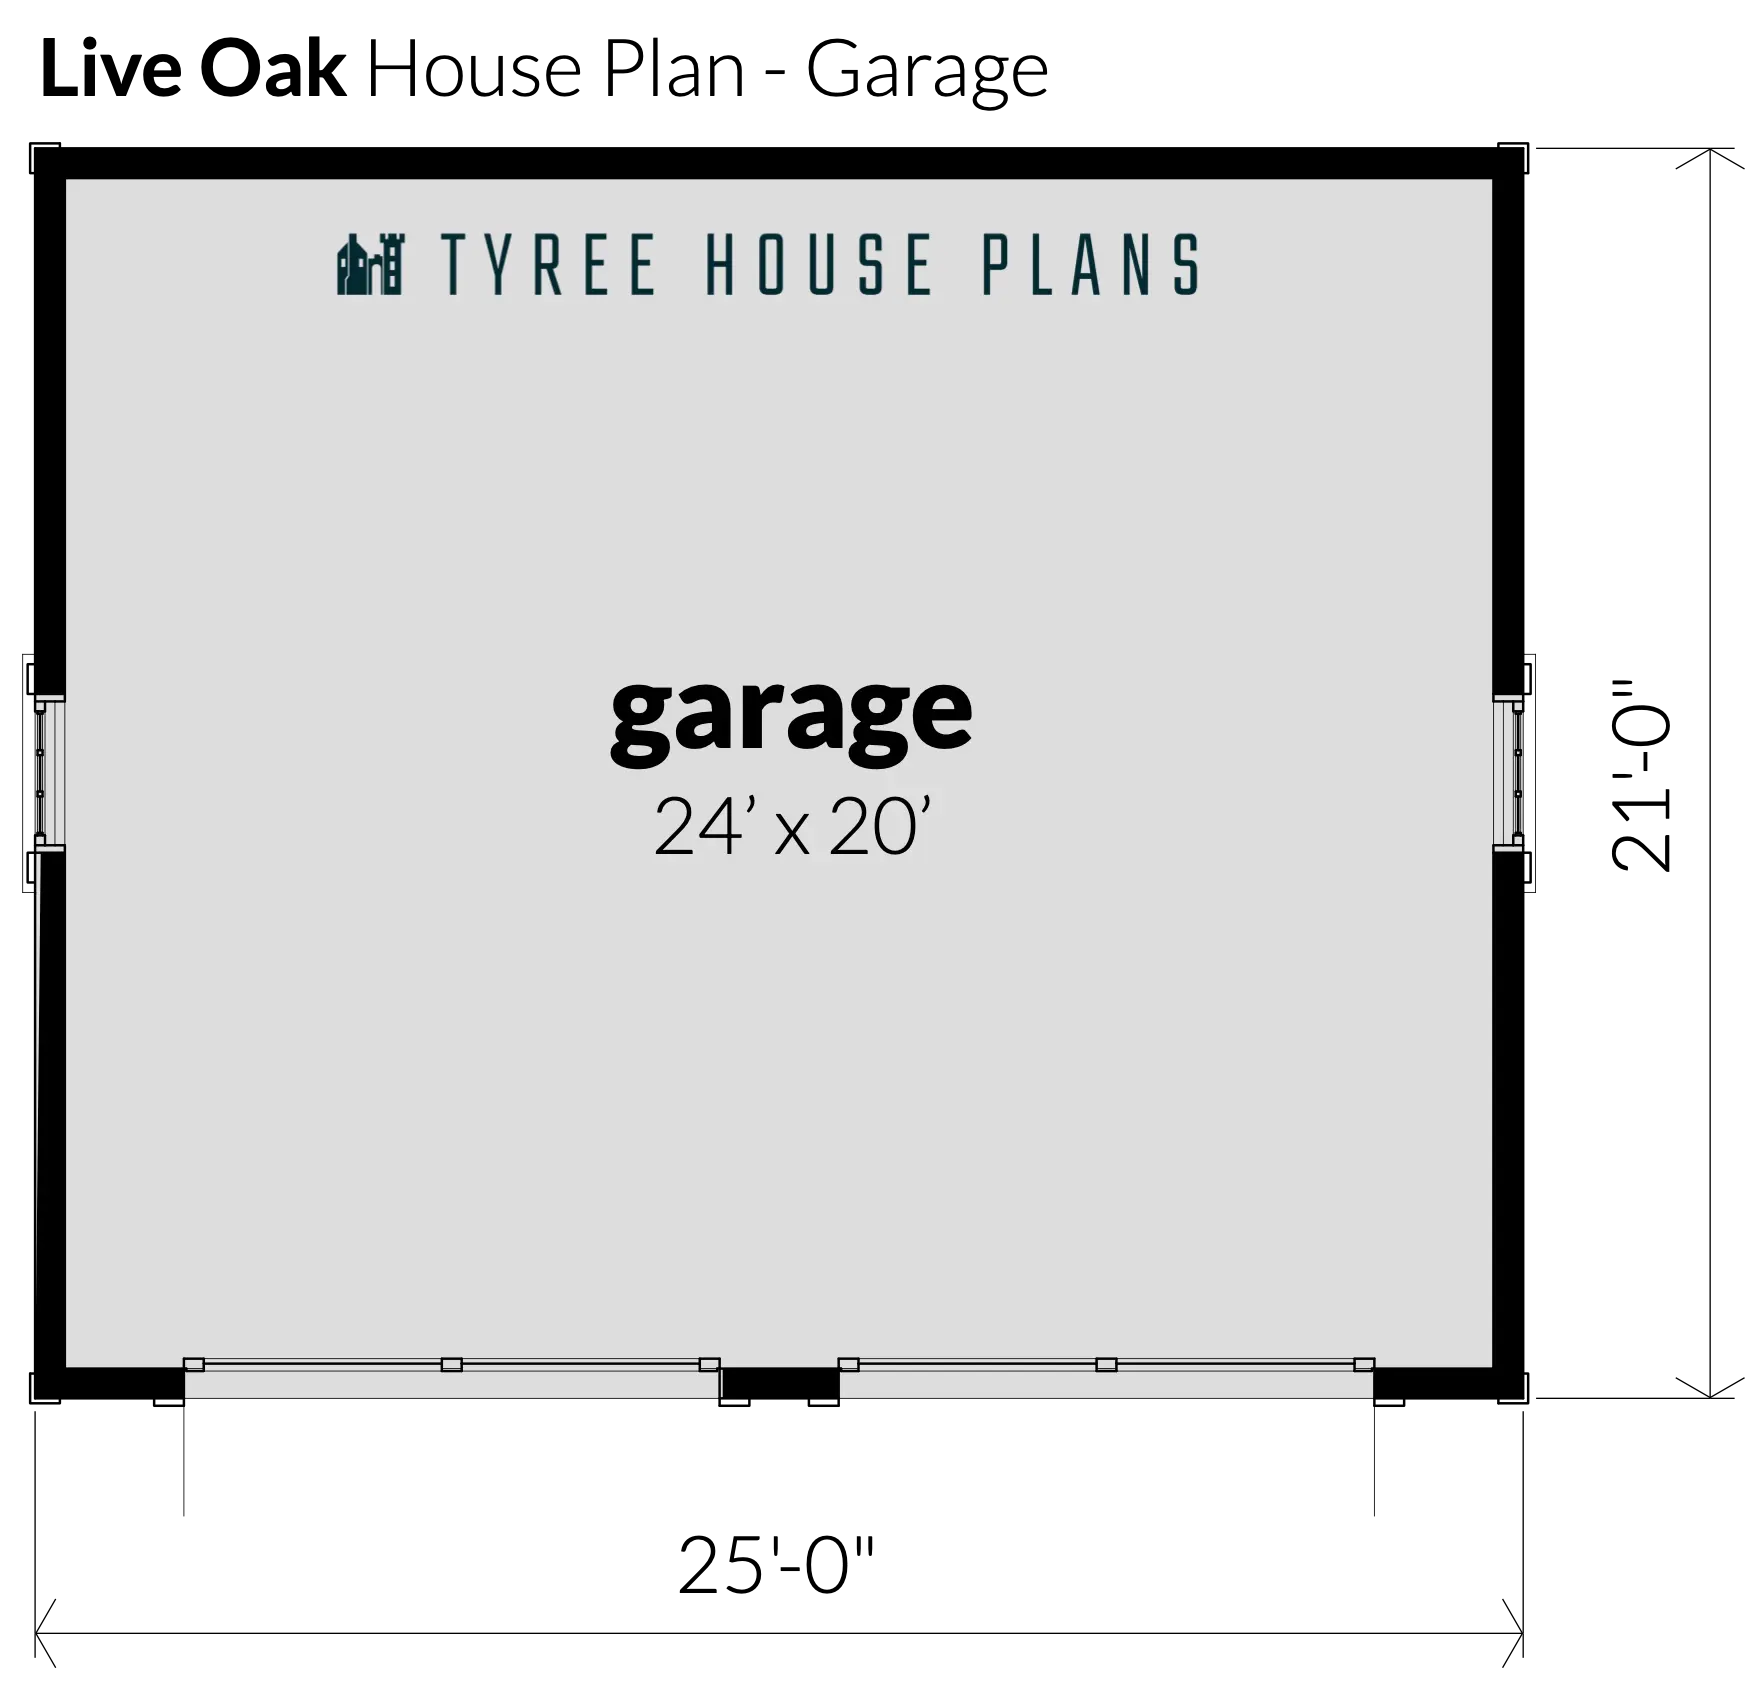 Garage - Live Oak by Tyree House Plans